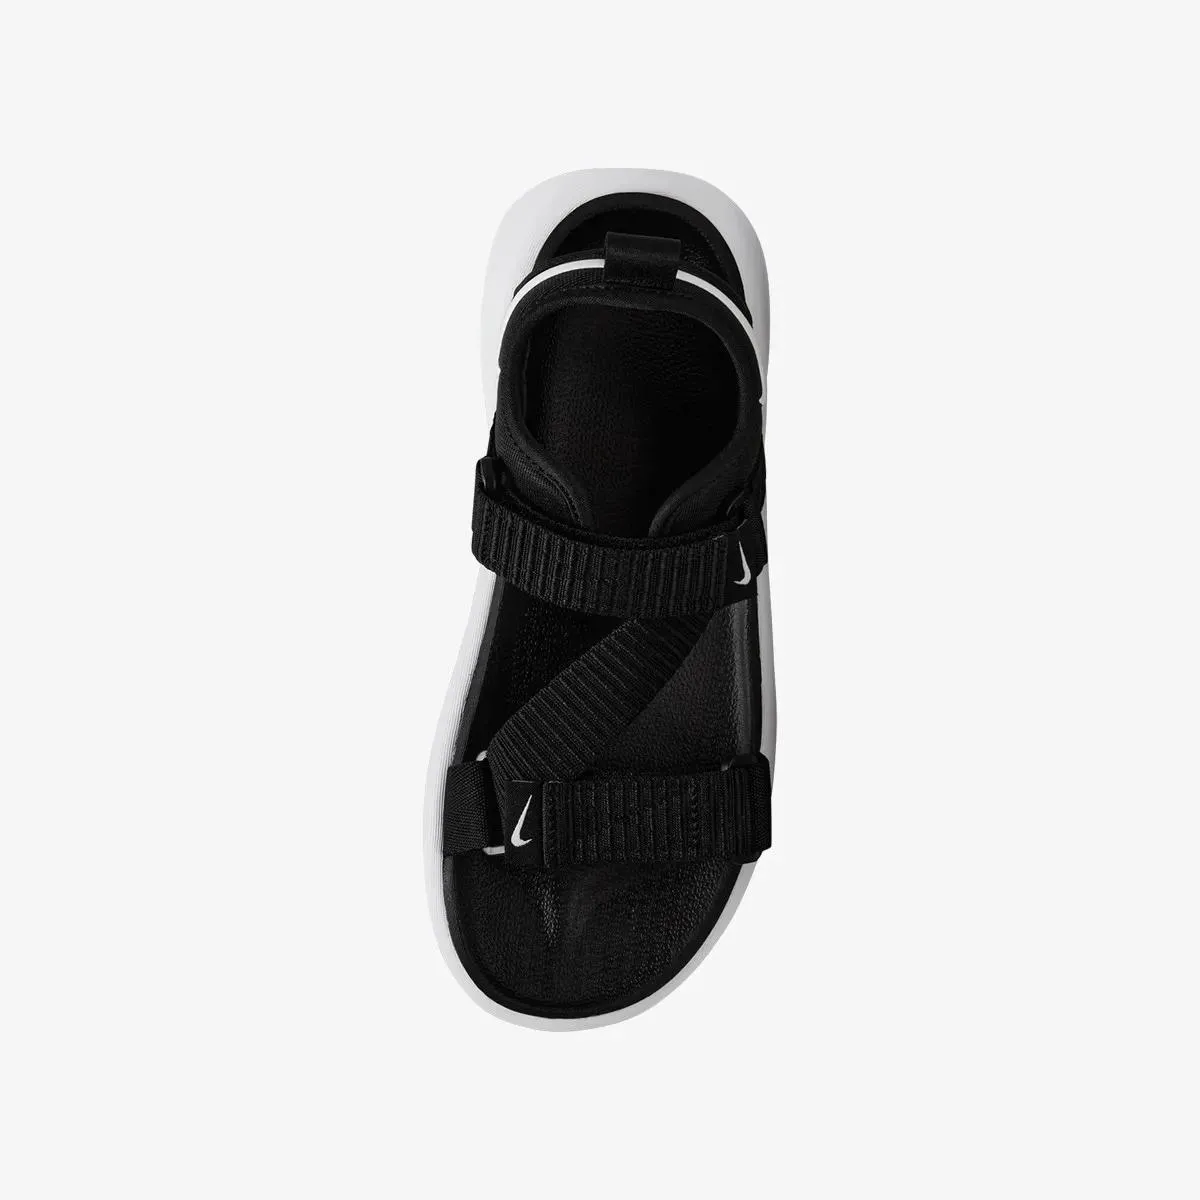 Nike Sandale Vista 